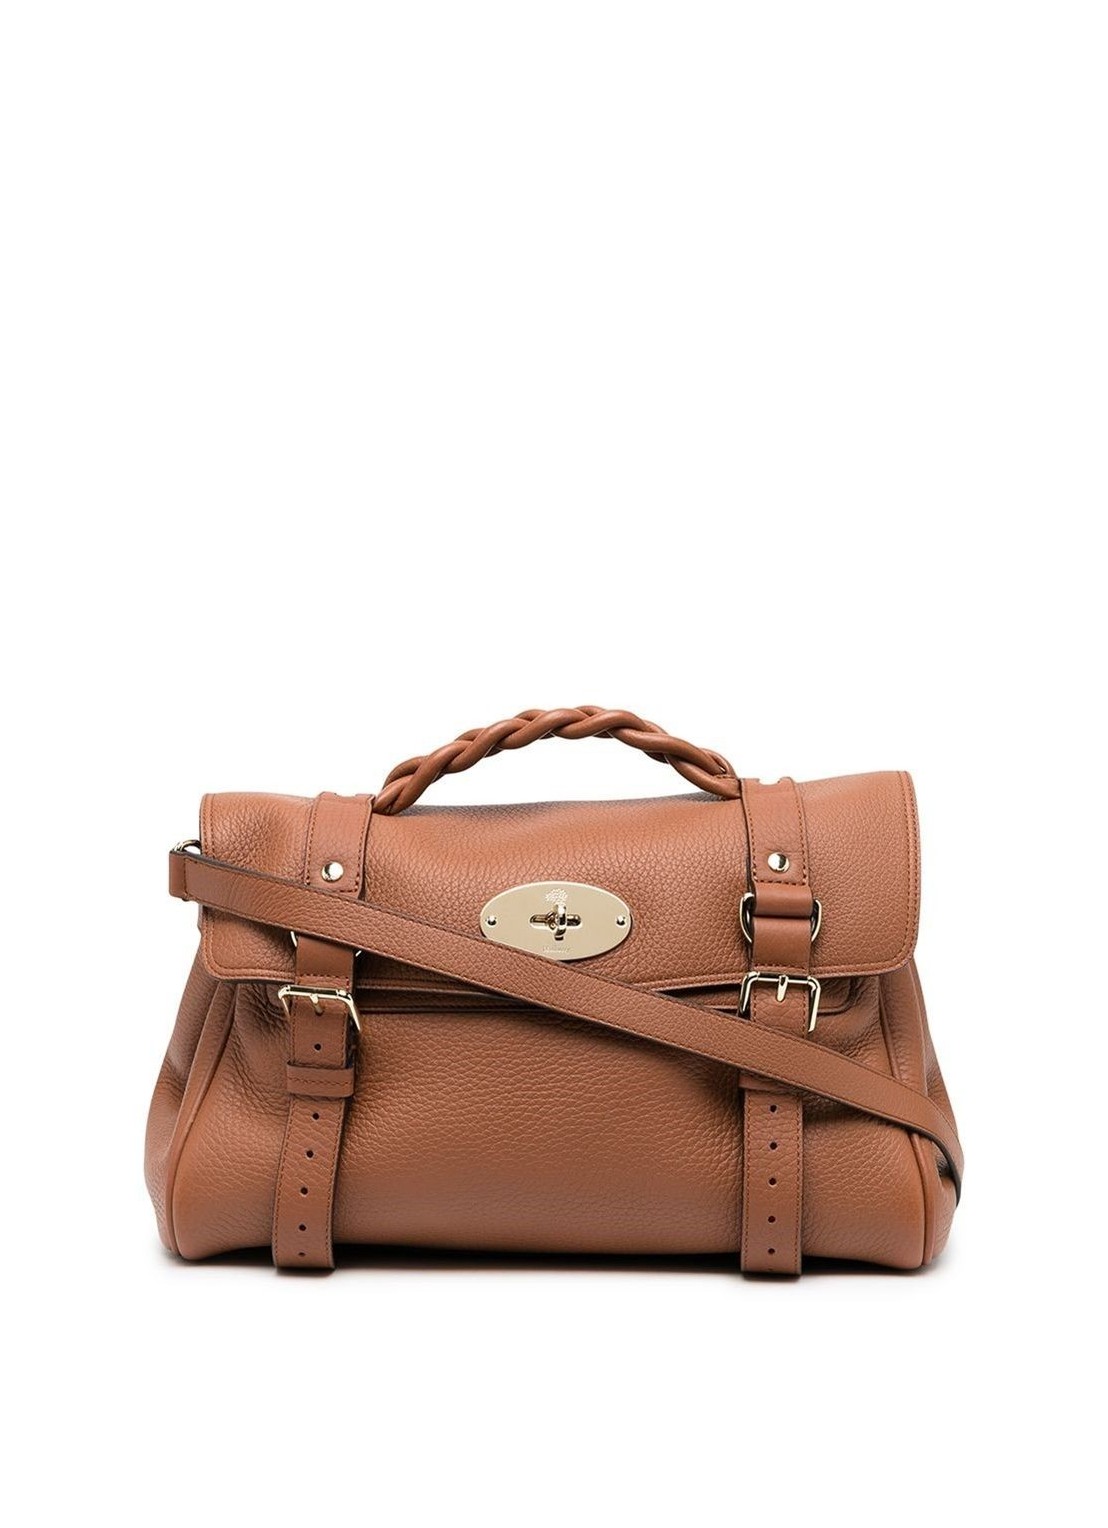 Handbag mulberry handbag woman alexa heavy grain hh6746736 g653 talla marron
 